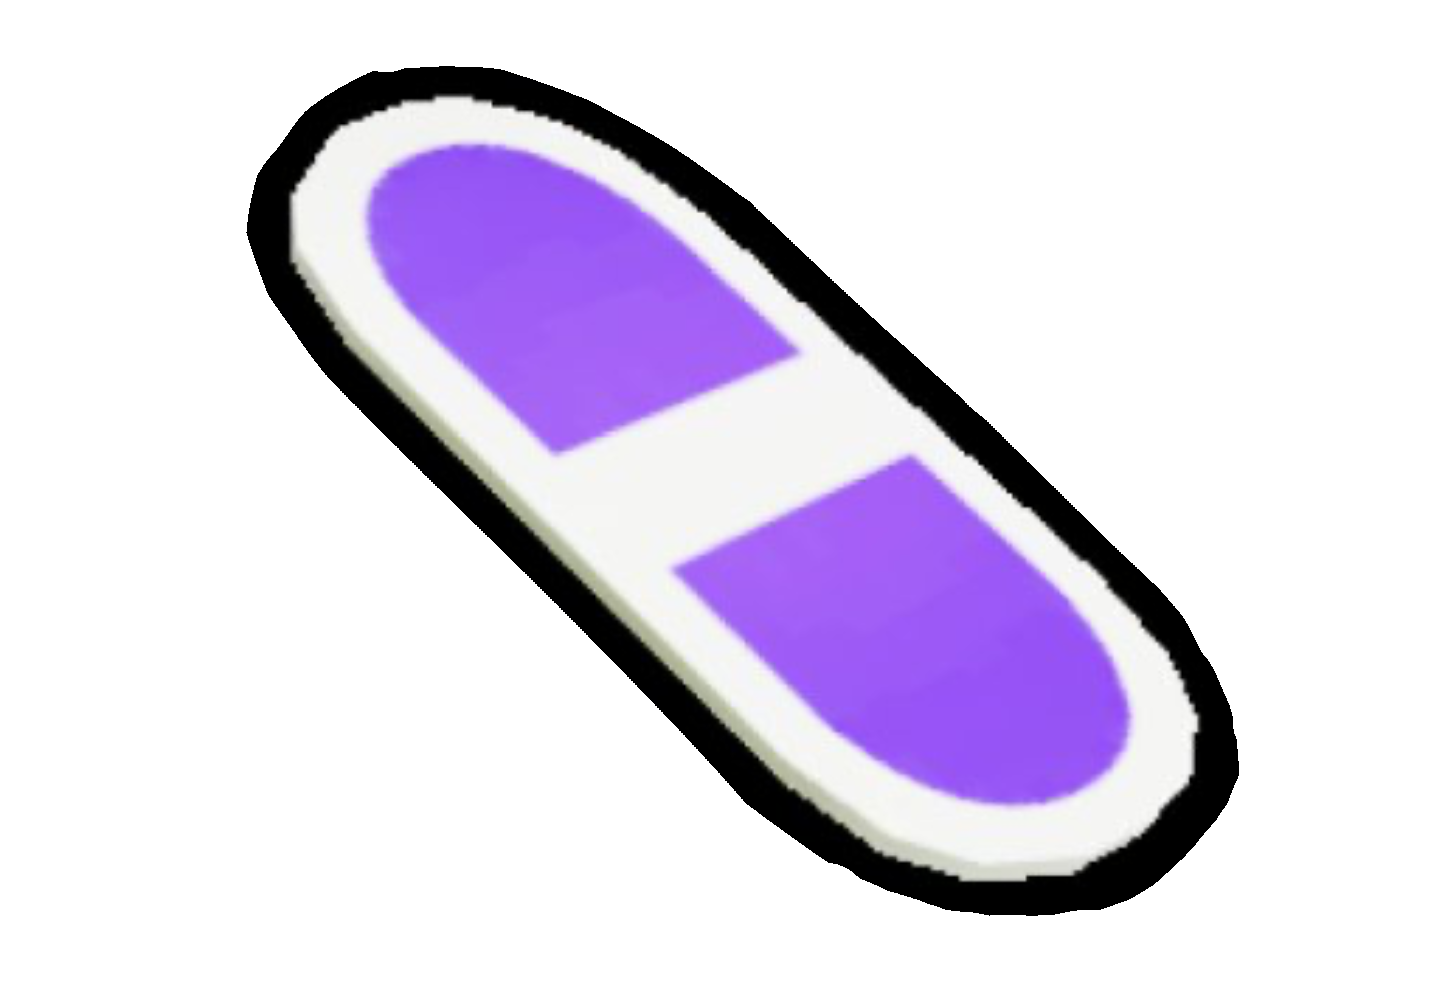 Purple Hoverboard (Pet Simulator X), Pet Simulator Wiki